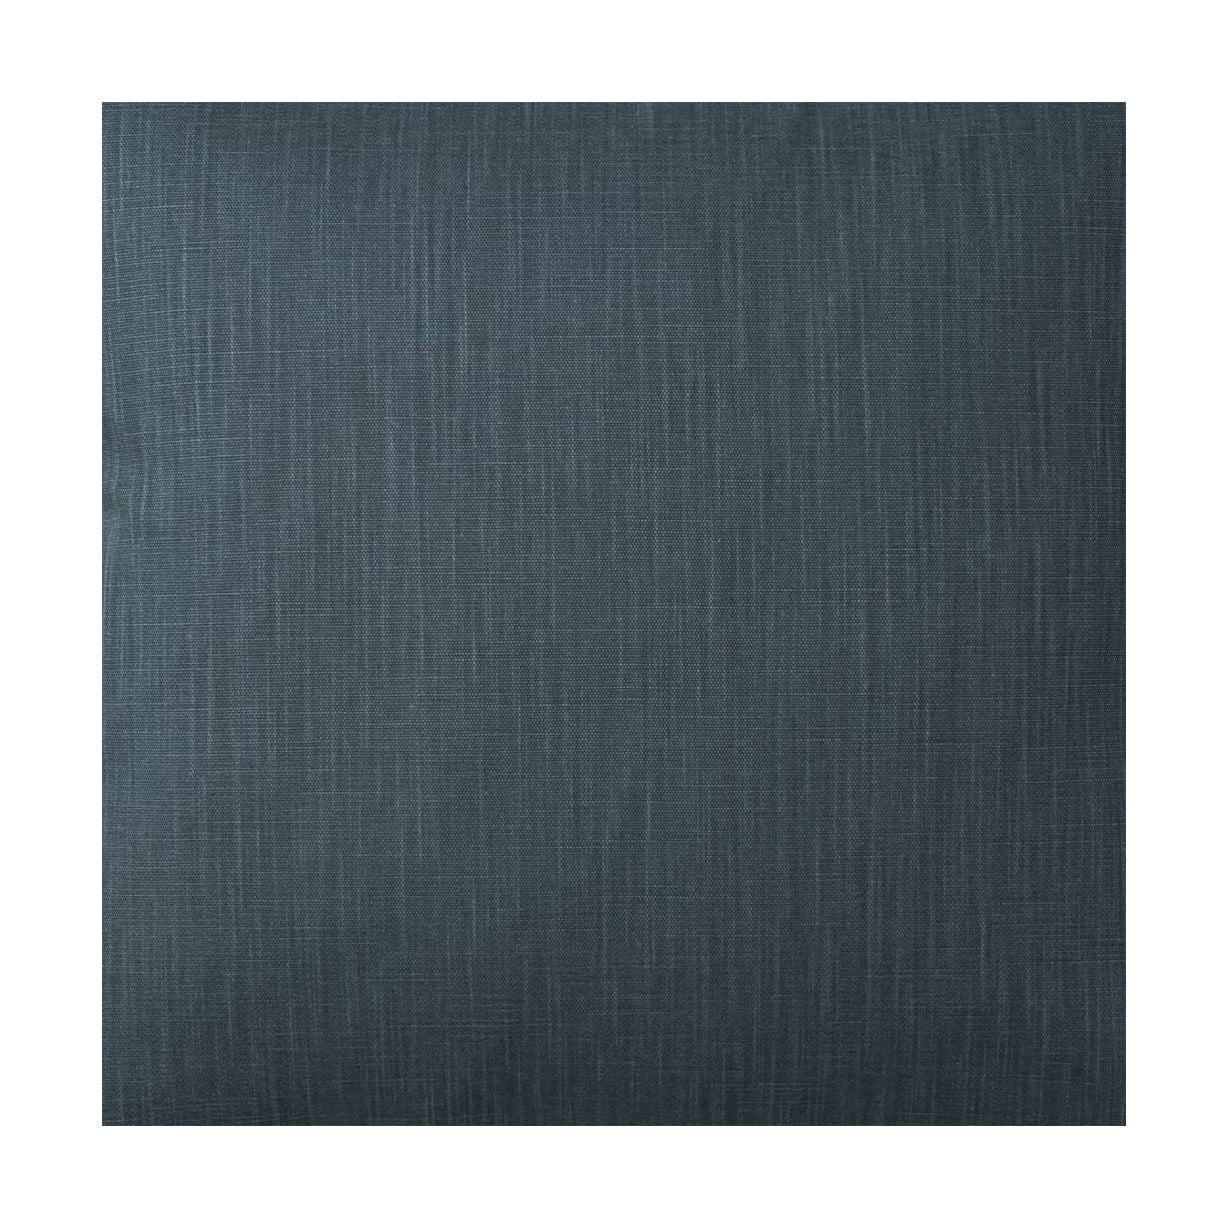 Spira klotz ancho de tela 150 cm (precio por metro), azul polvoriento